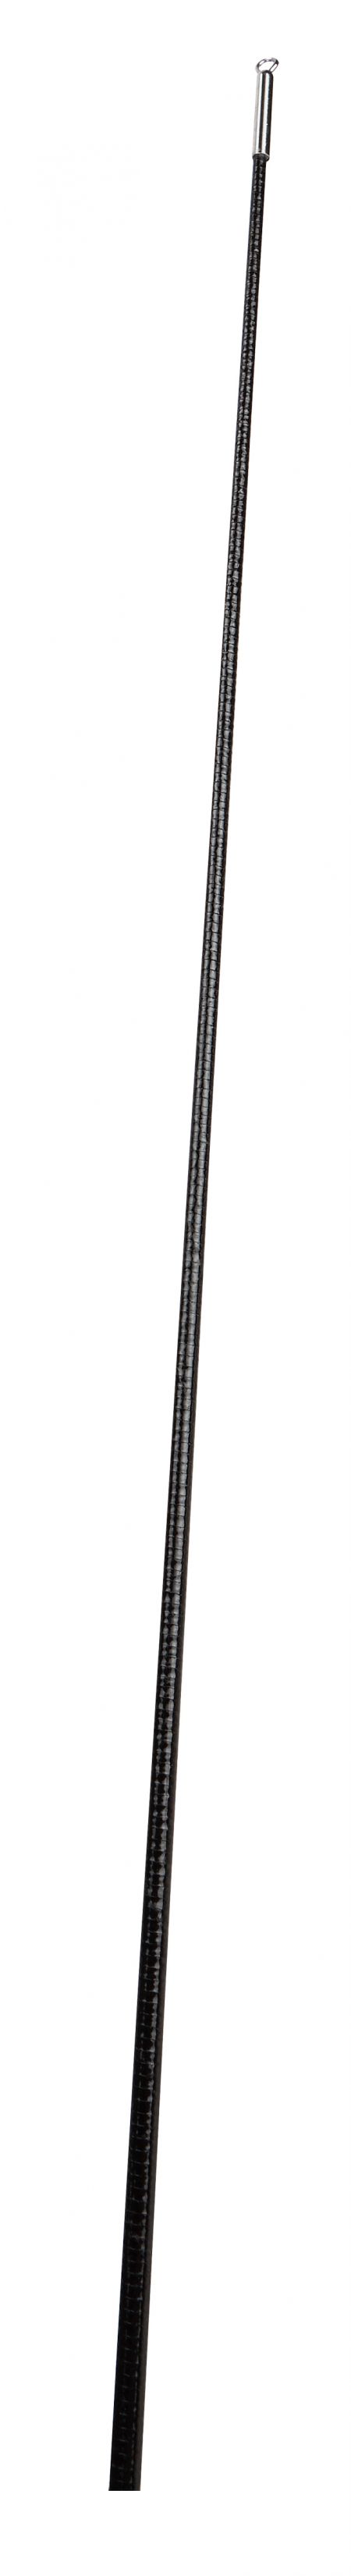 Okuma G-Power Tele Pole Rod